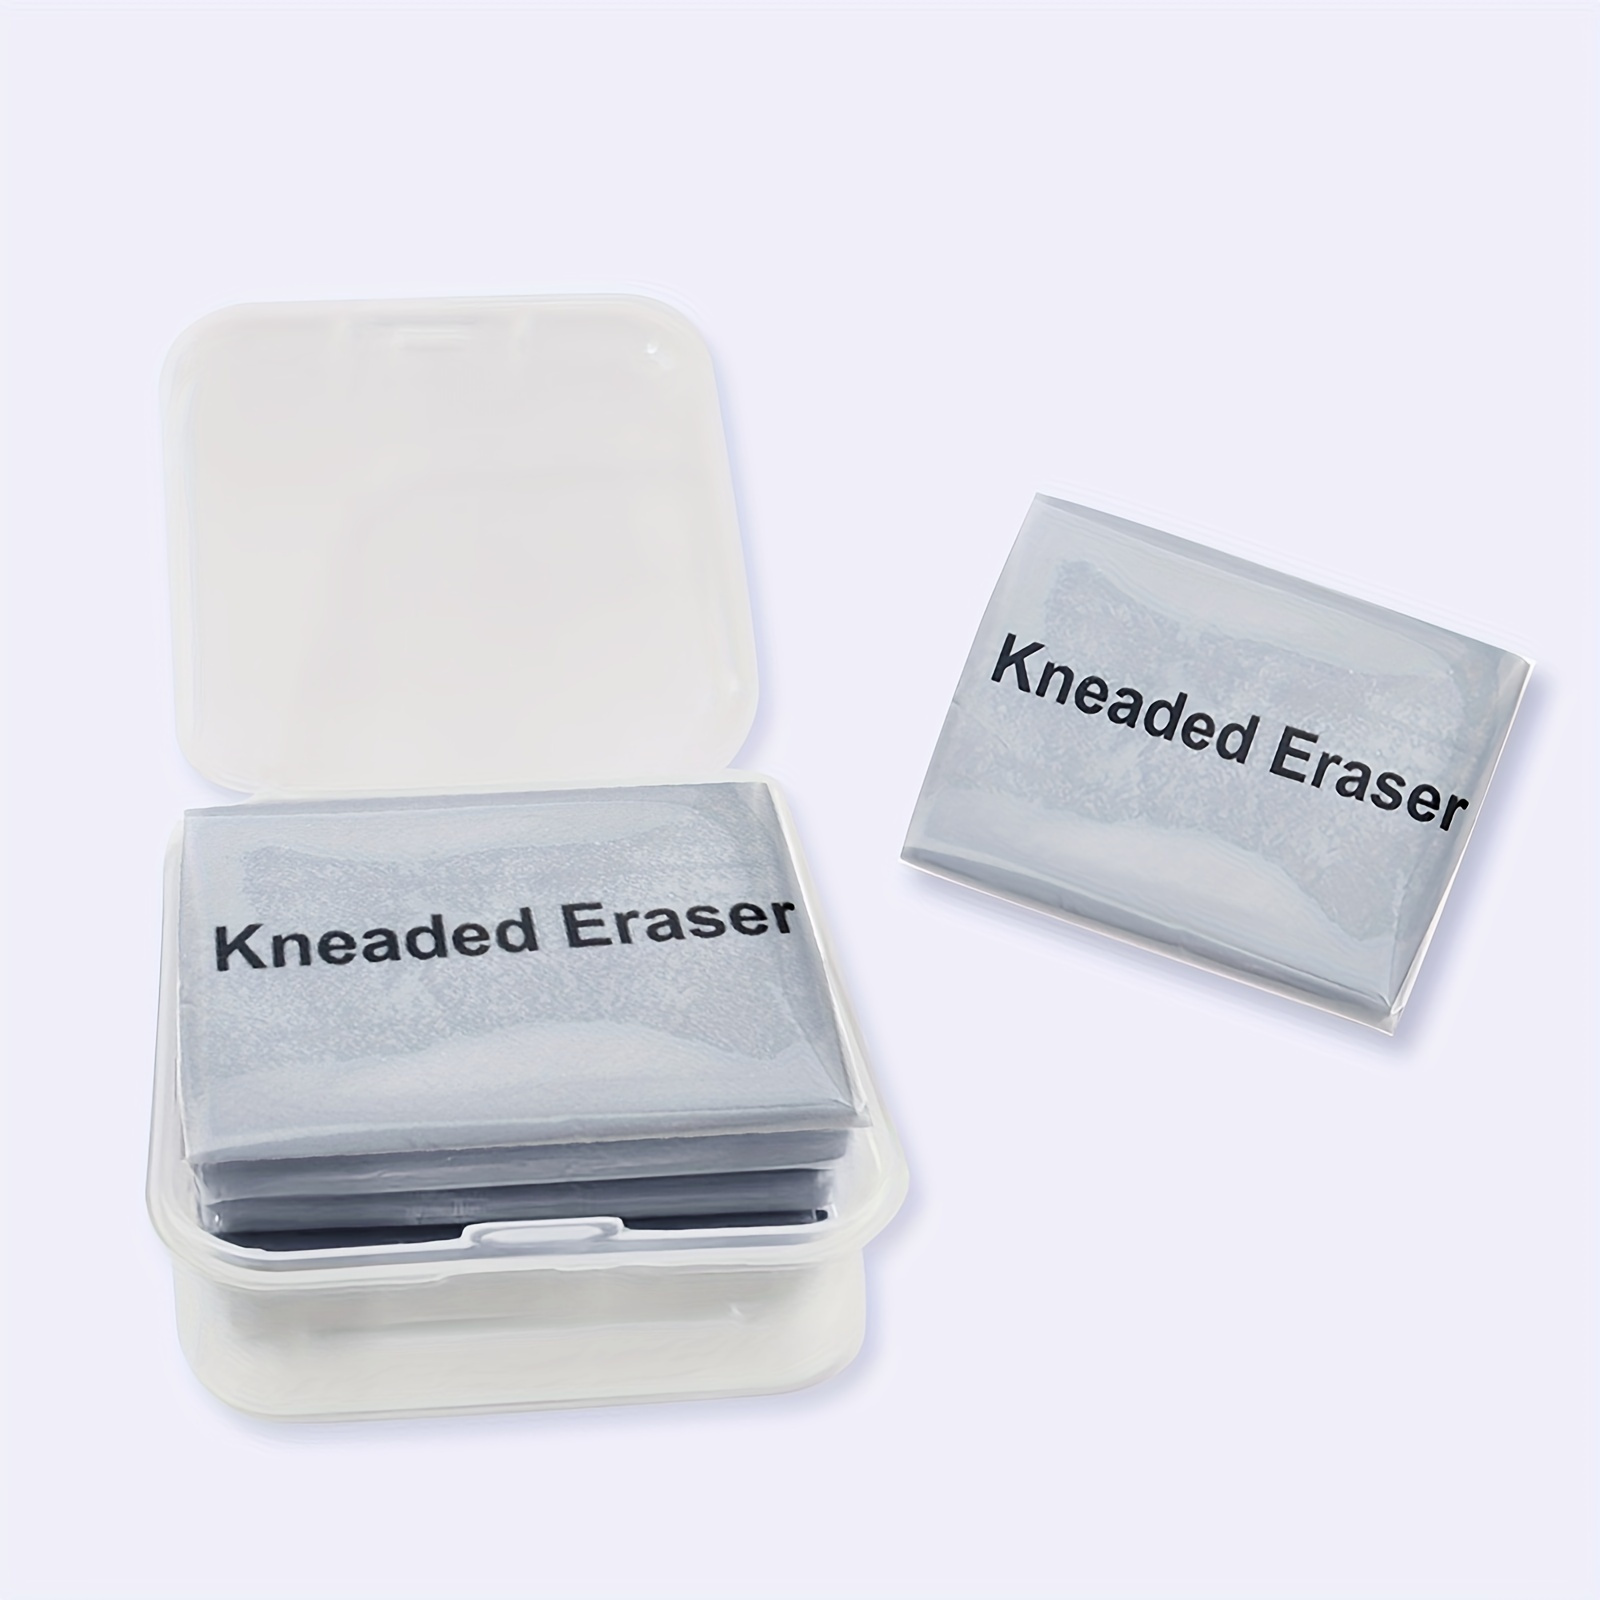 18 Pack Kneaded Eraser for Artists Drawing, Gum Eraser, Kneadable